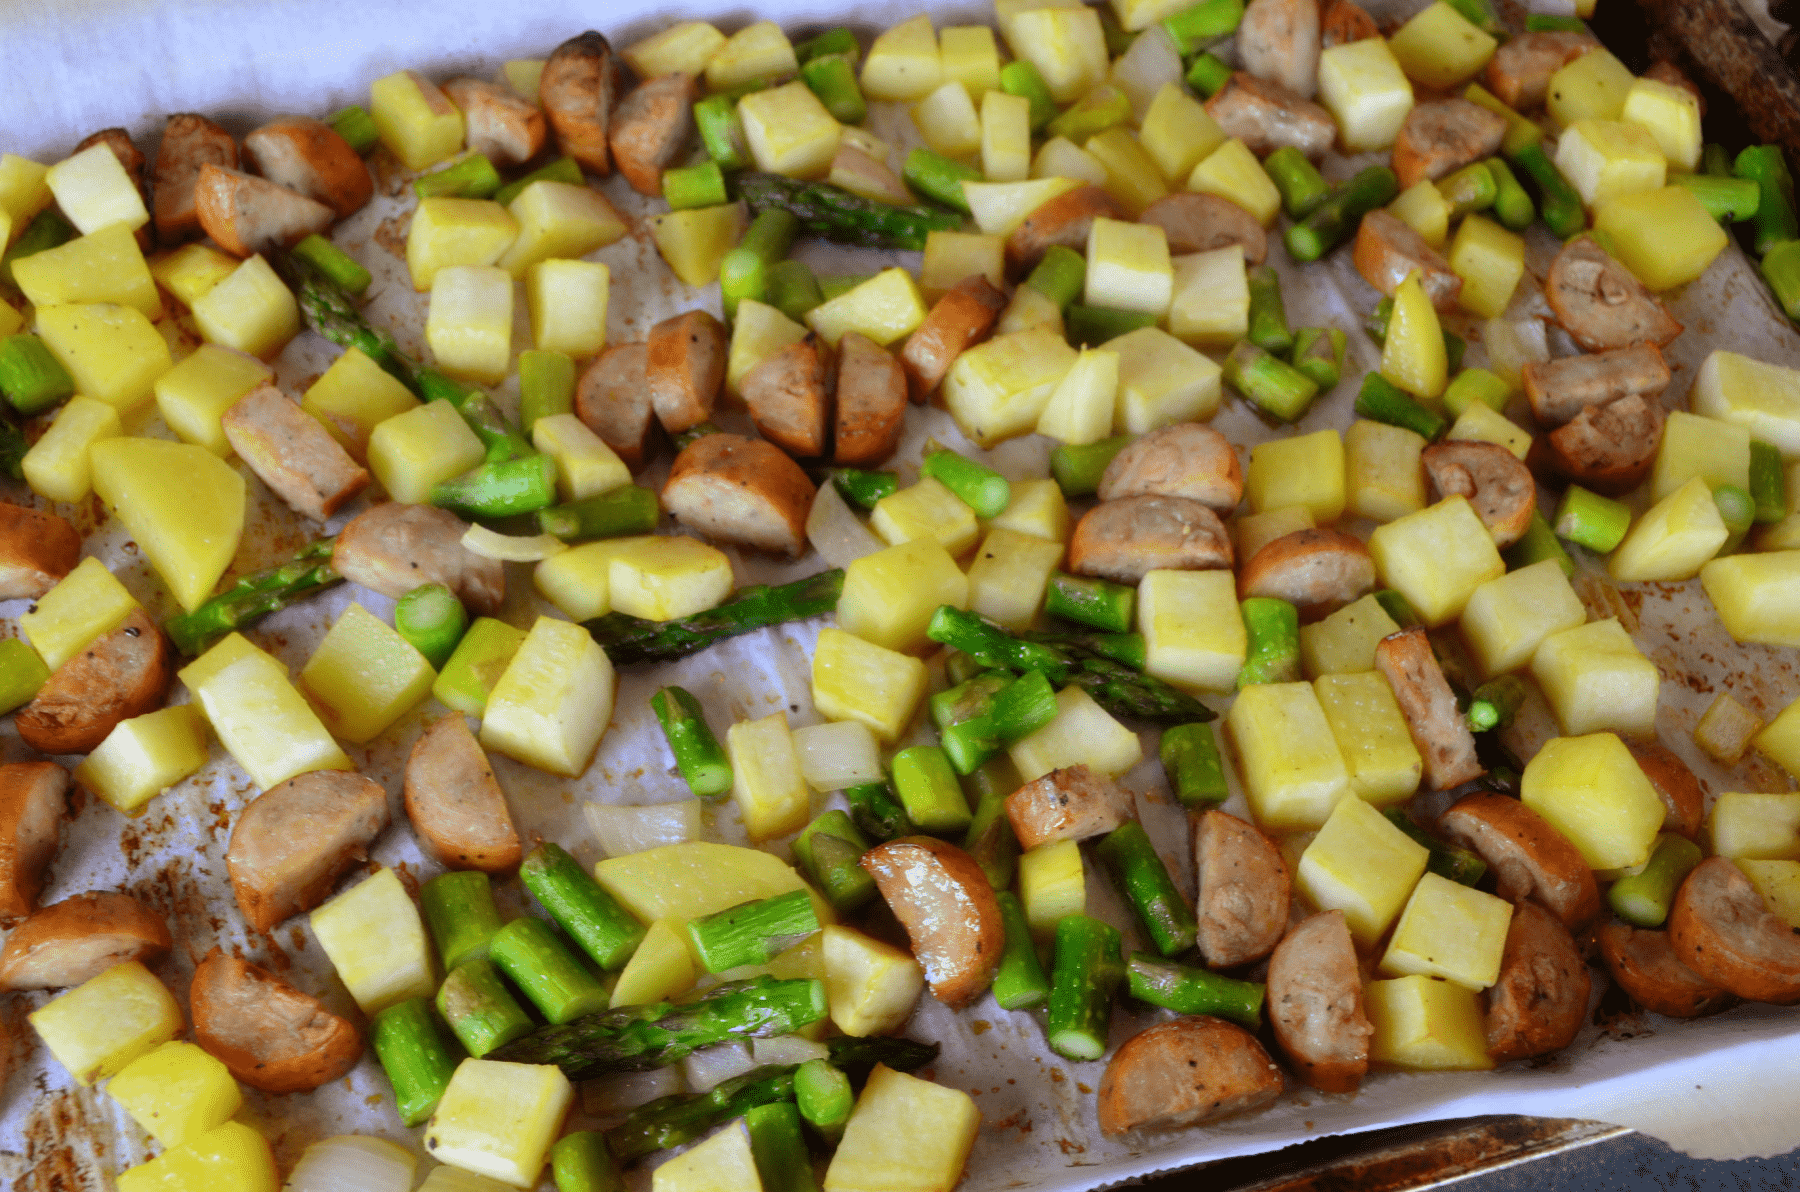 sheet pan meal of asparagus and sausage